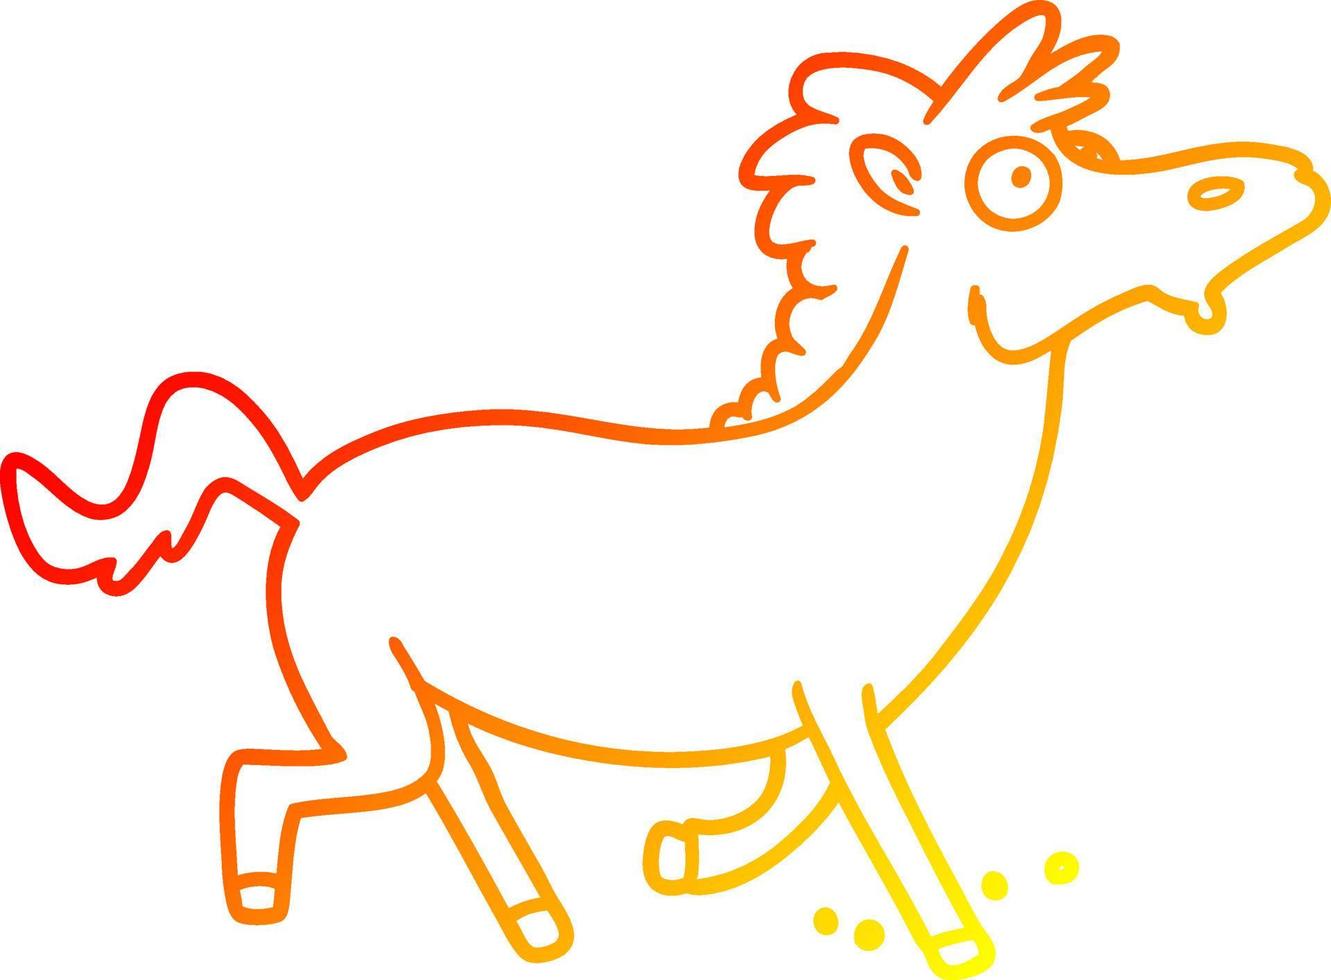 dibujo de línea de gradiente cálido caballo corriendo de dibujos animados vector